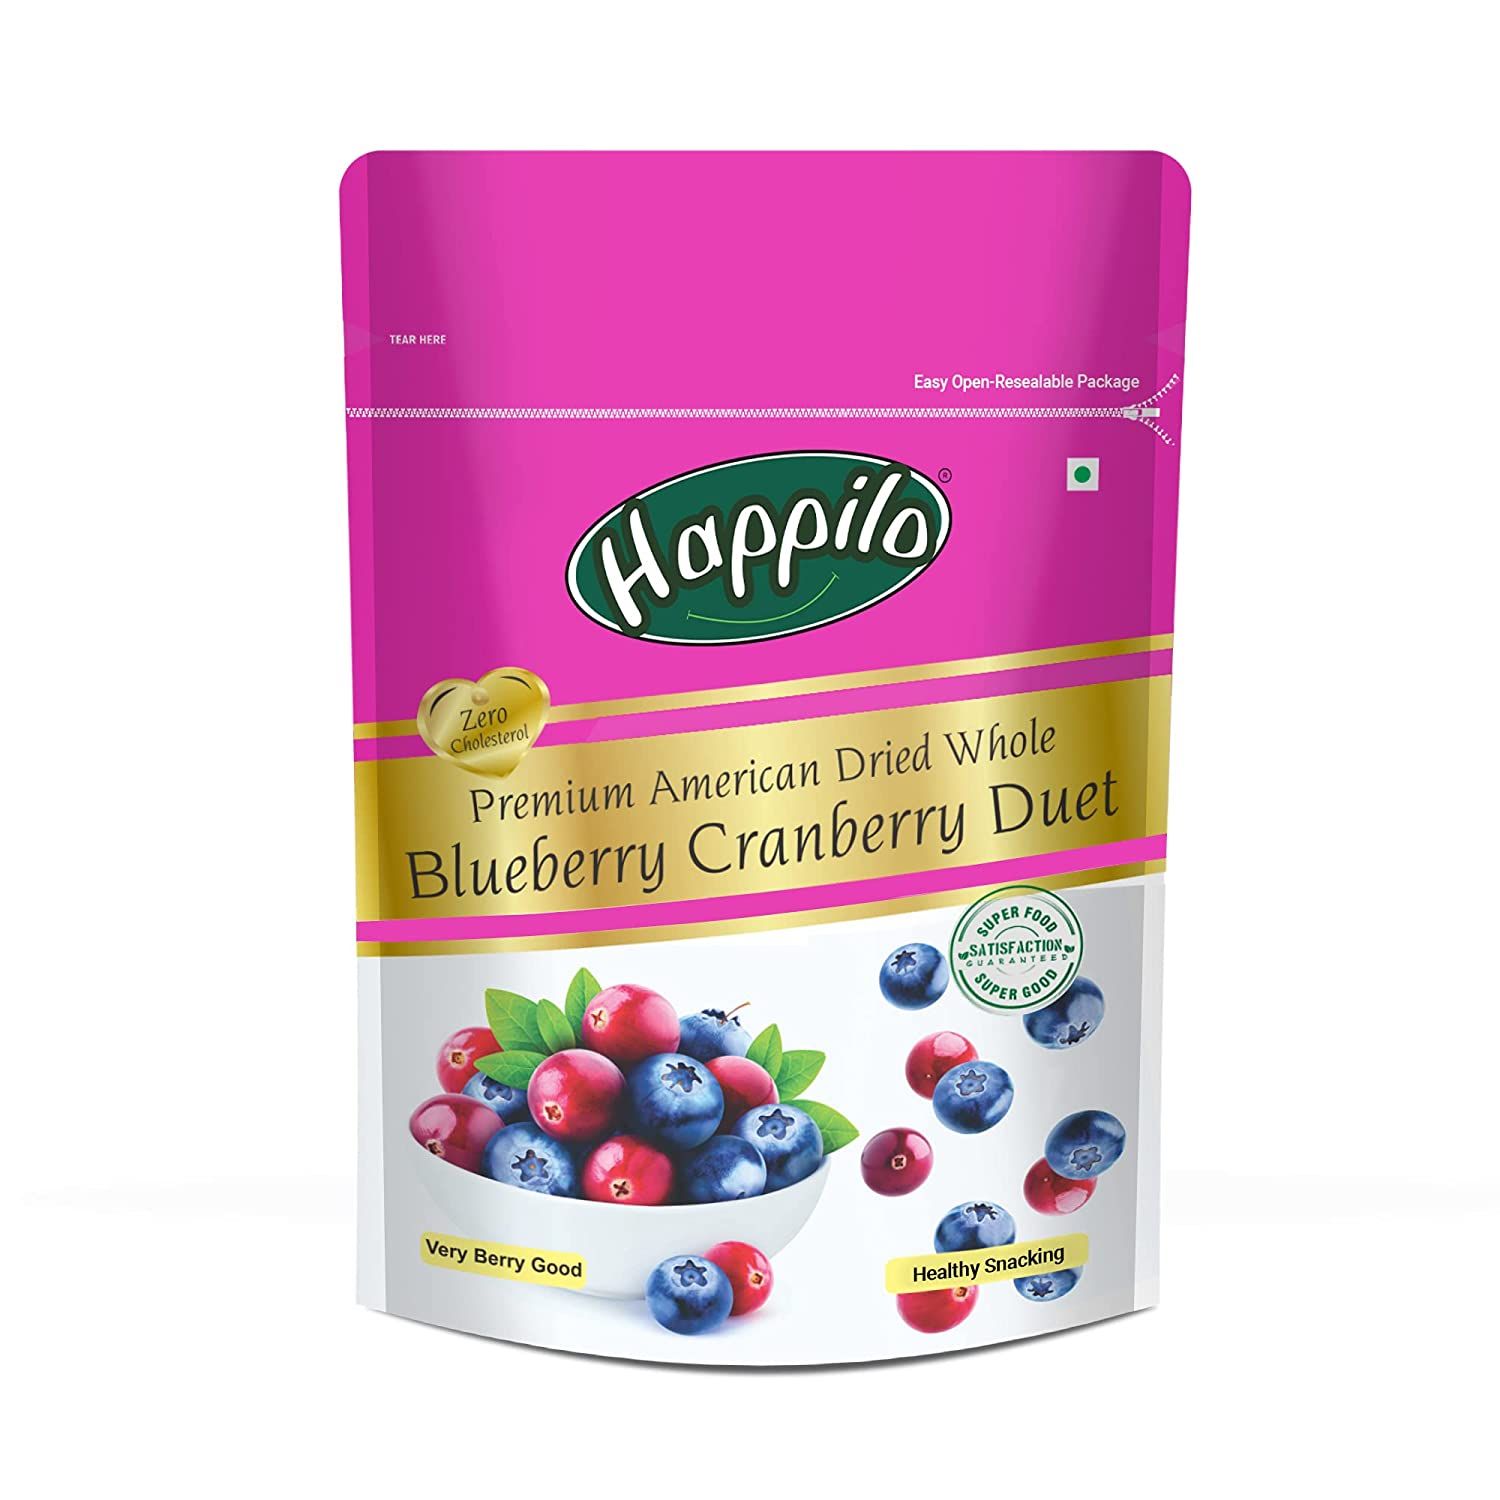 Happilo Premium American Dried Whole Blueberry Cranberry Duet Image